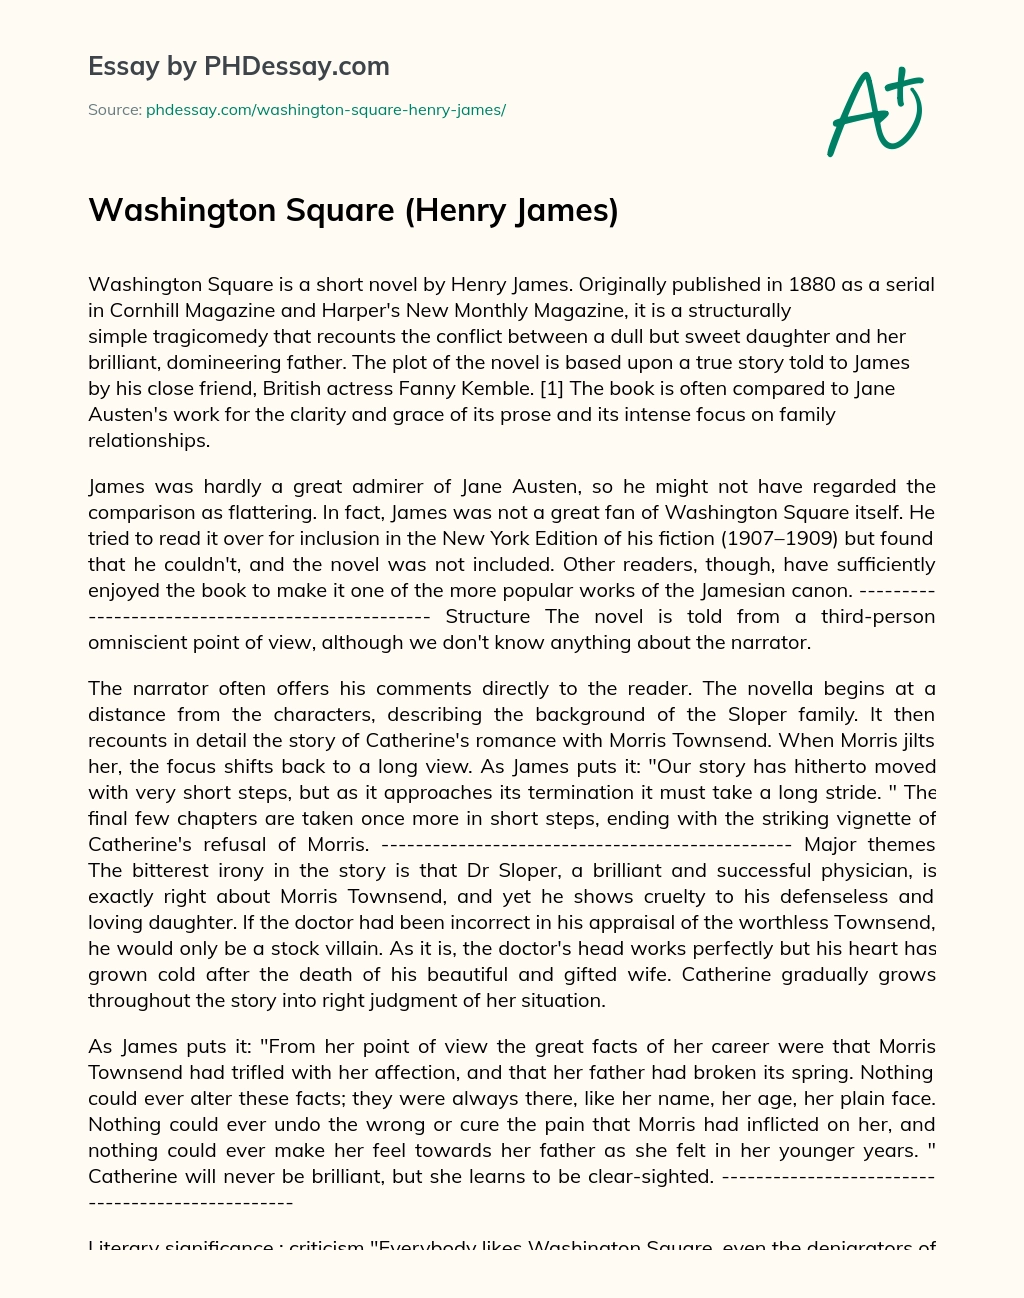 Washington Square (Henry James) essay